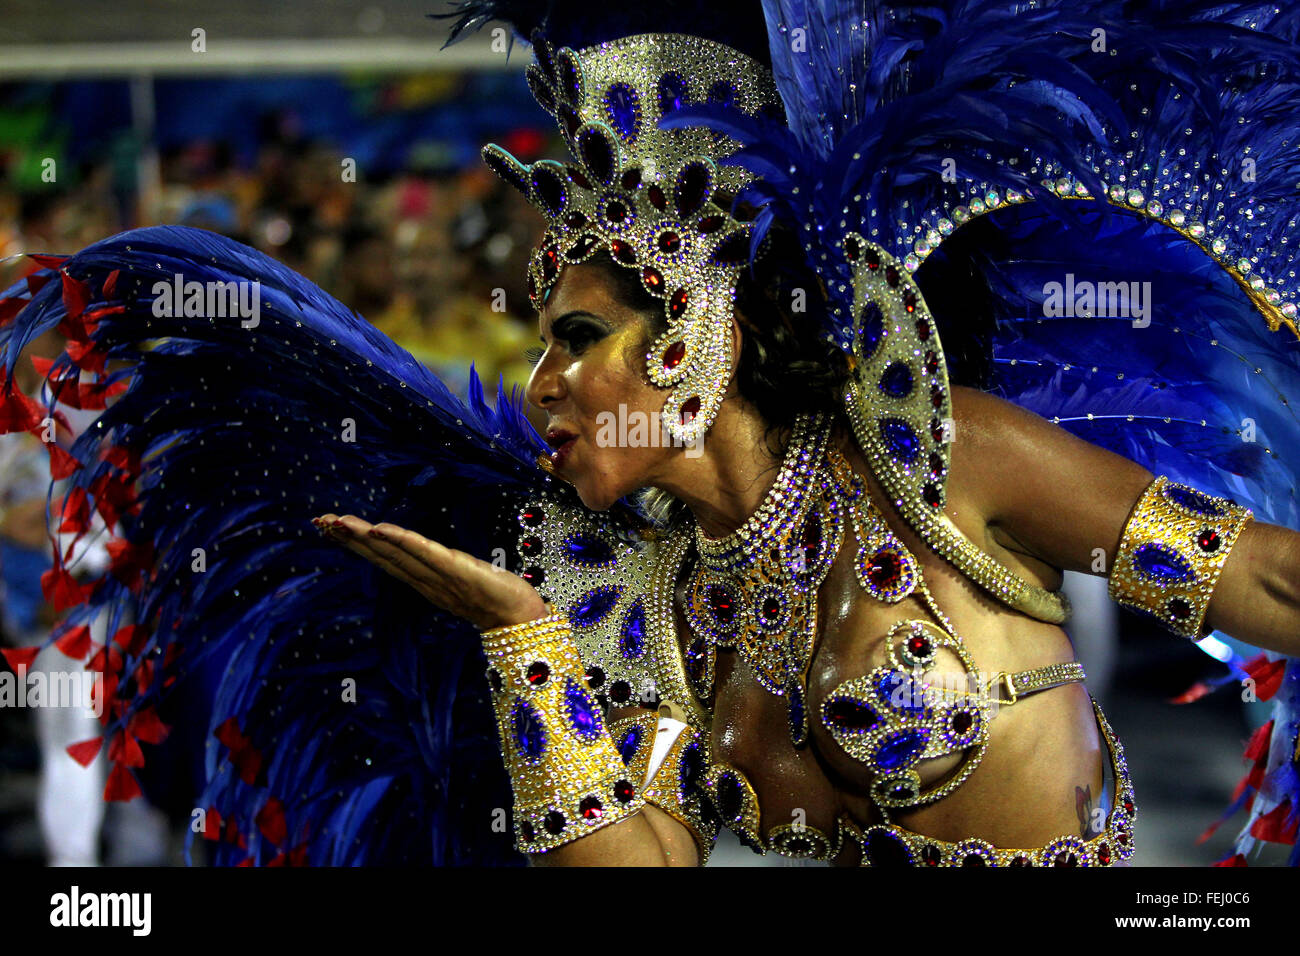 Rio De Janeiro, Brazil. 7th Feb, 2016. A dancer takes part in a parade during the Rio de Janeiro Carnival, at the Marques de Sapucai Sambadrome in Rio de Janeiro, Brazil, on Feb. 7, 2016. Credit:  Marcos Arcoverde/AGENCIA ESTADO/Xinhua/Alamy Live News Stock Photo